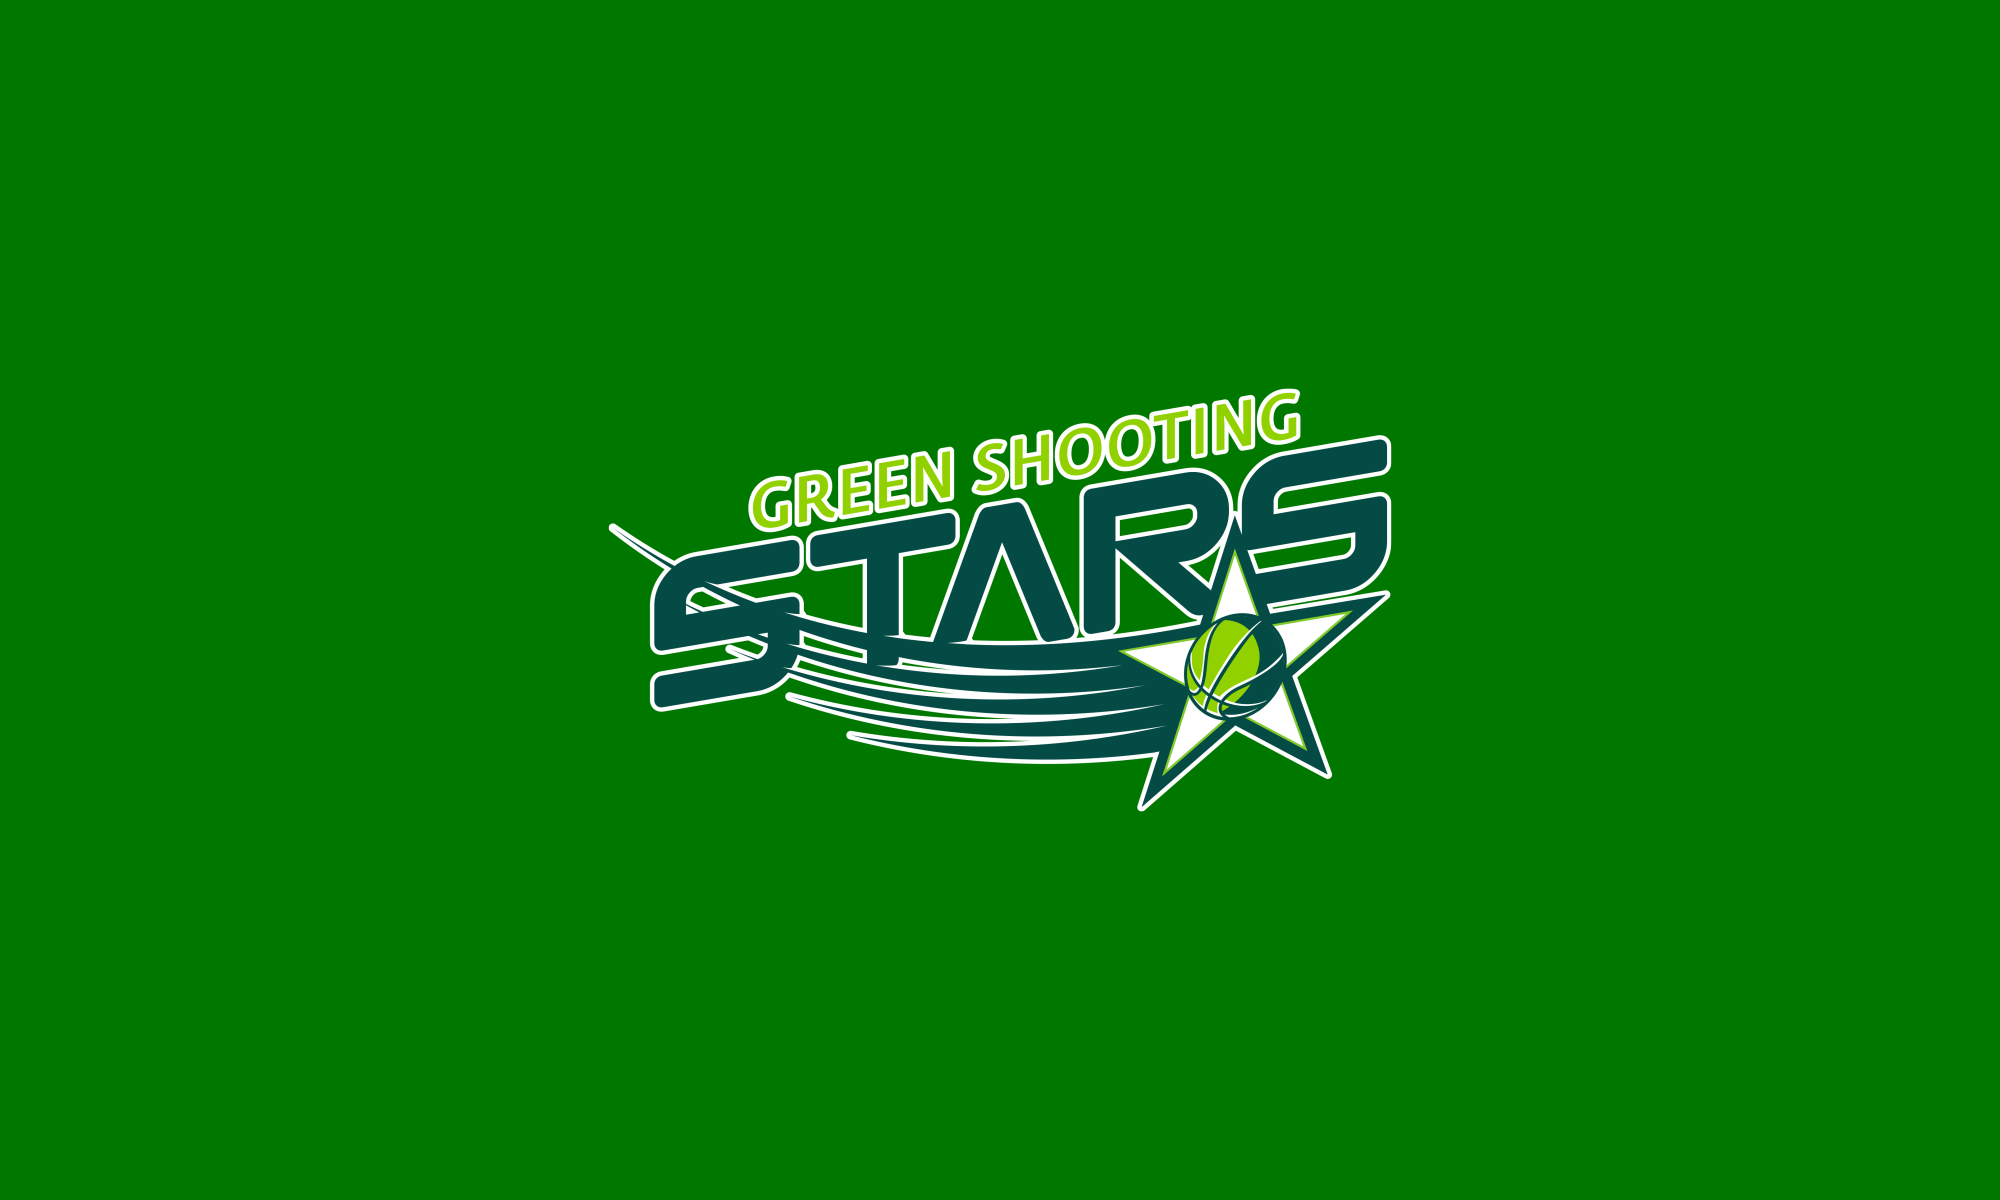 Green Shooting Stars